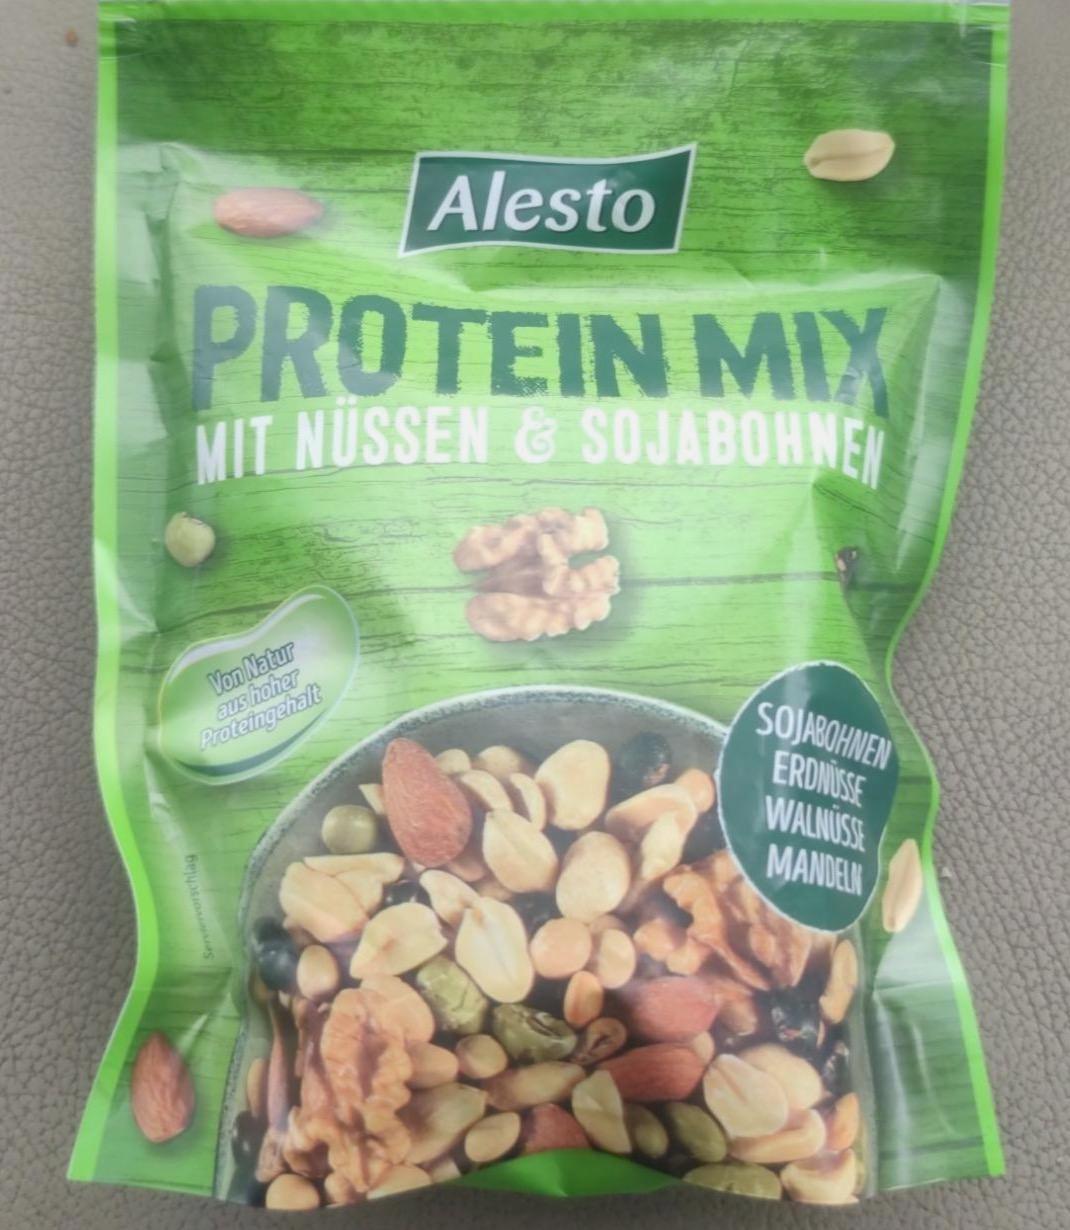 Képek - Protein mix Alesto